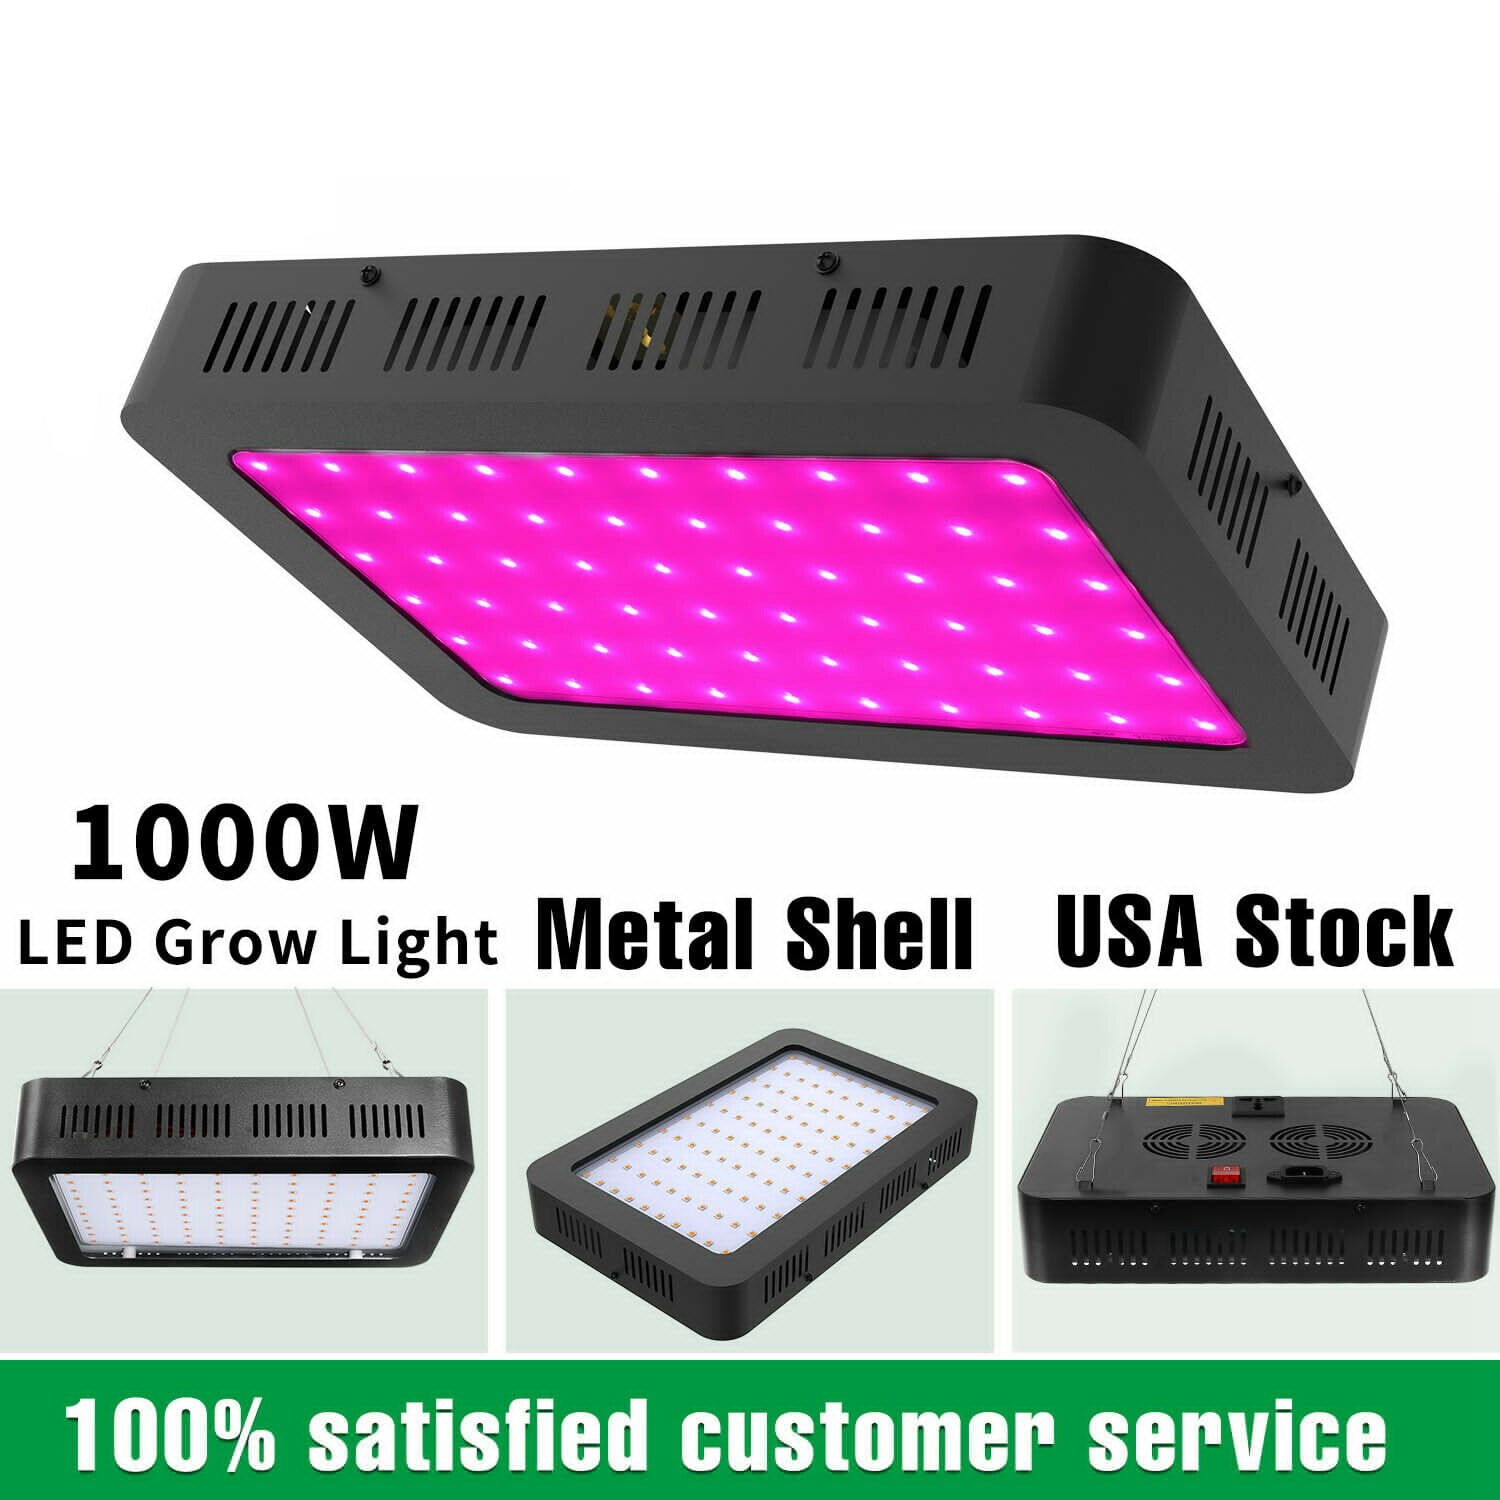 Details about   2000W Hydroponics LED Grow Lights Full Spectrum Indoor System Veg Flower Lamp 